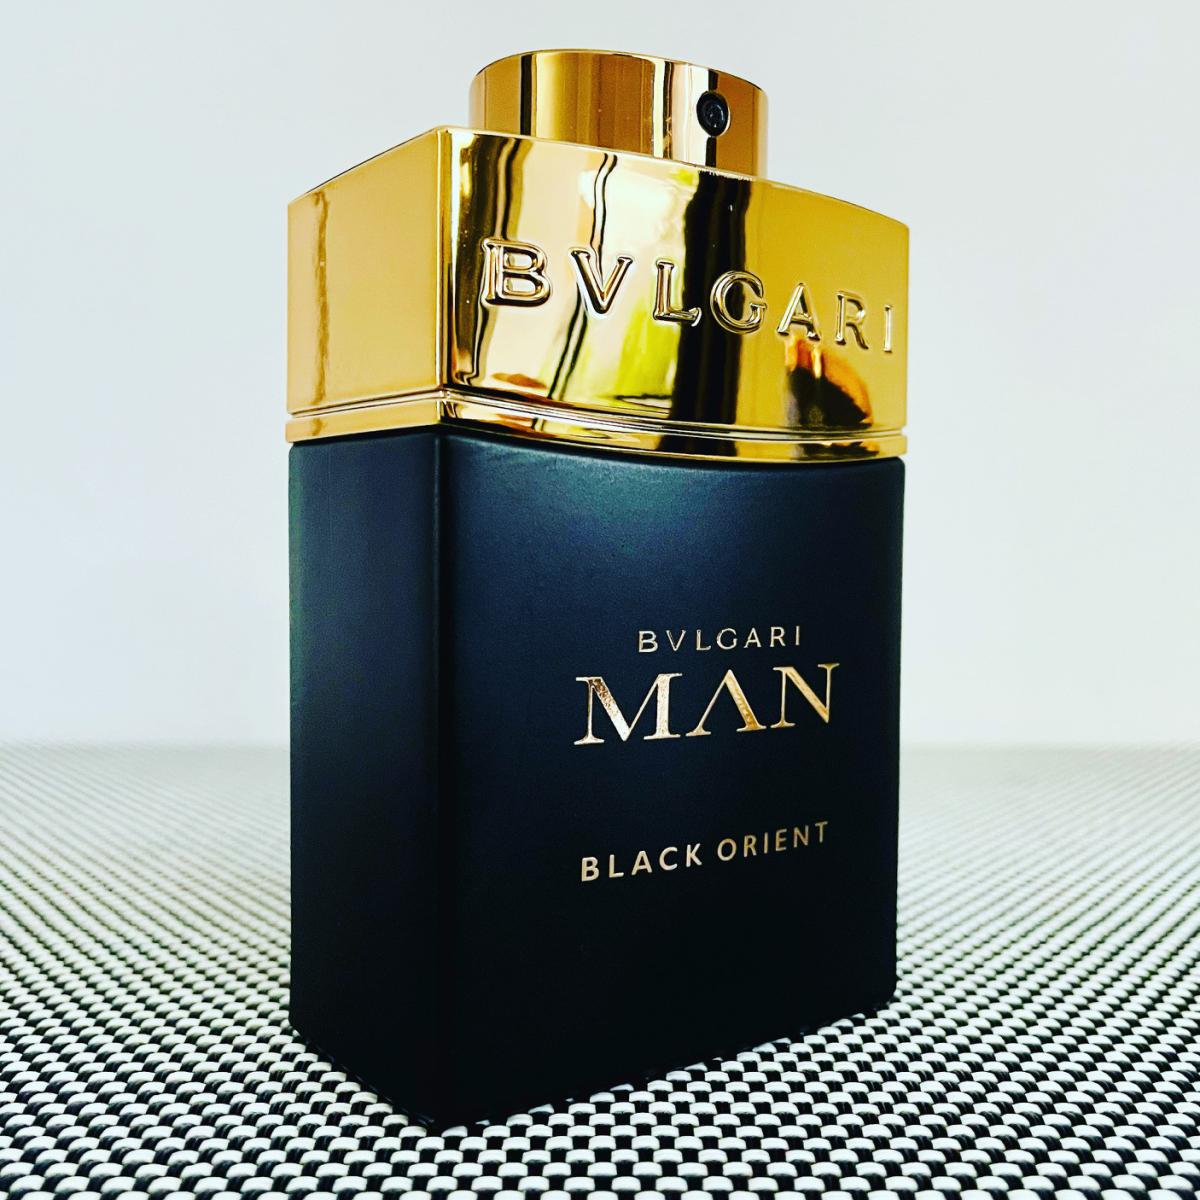 Bvlgari Man Black Orient Bvlgari cologne - a fragrance for men 2016